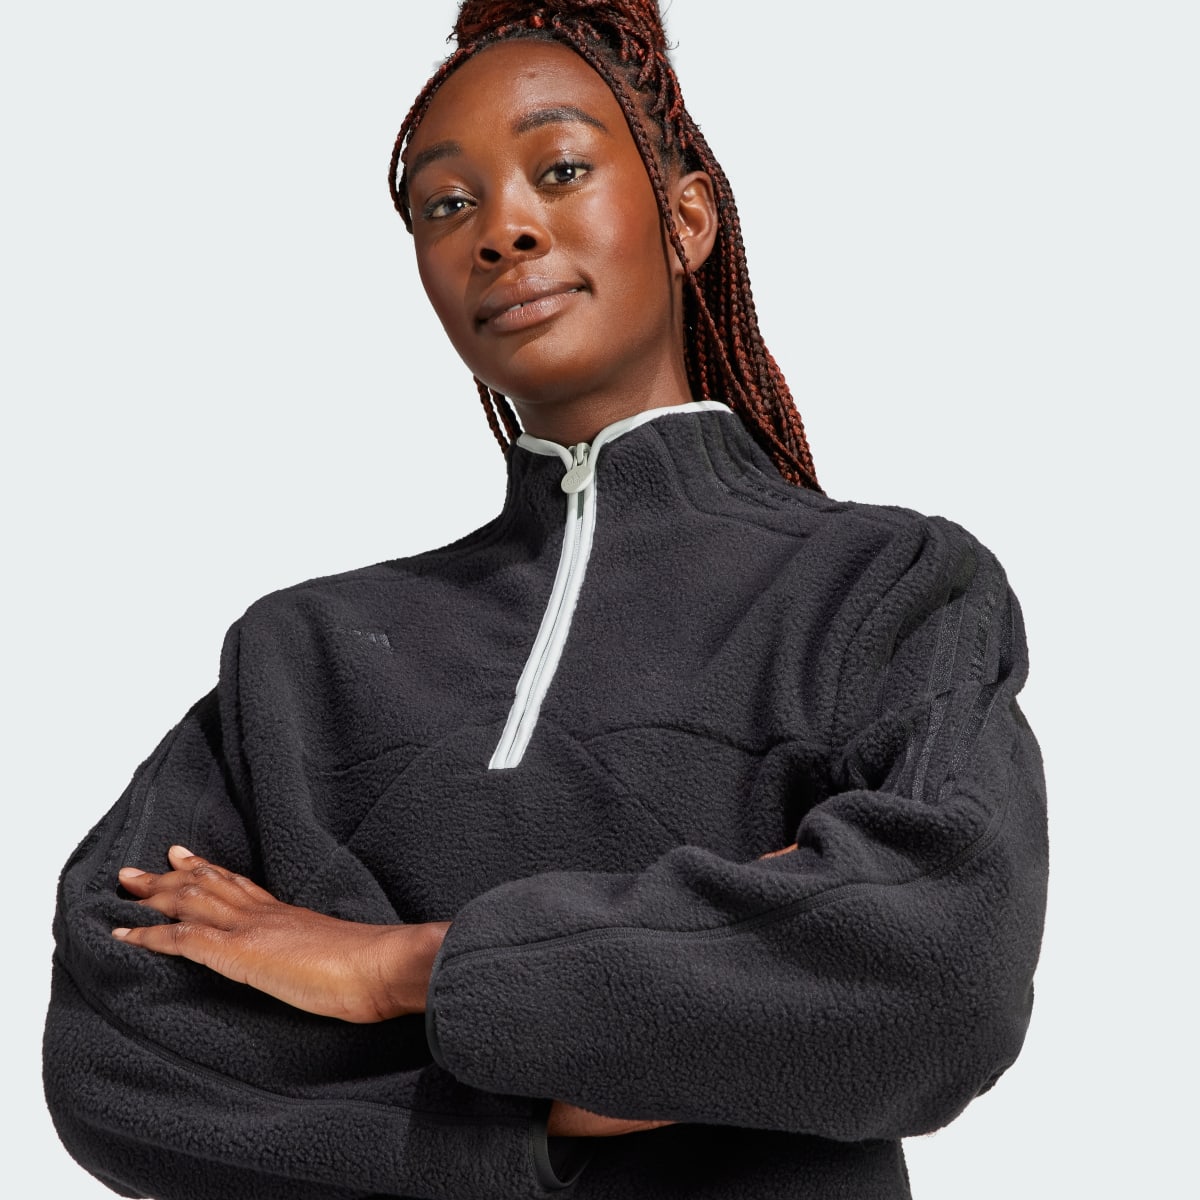 Adidas Tiro Half-Zip Fleece Sweatshirt. 6